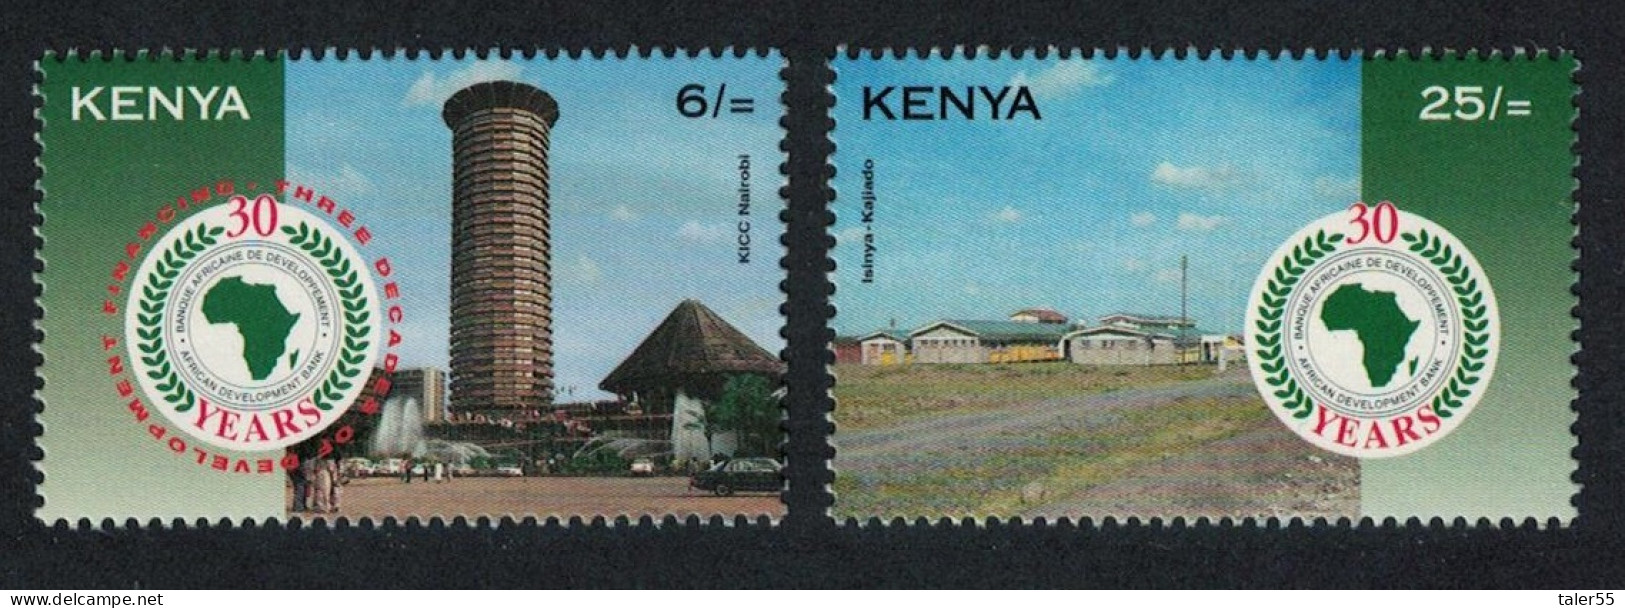 Kenya 30th Anniversary Of African Development Bank 2v 1994 MNH SG#626-627 - Kenya (1963-...)